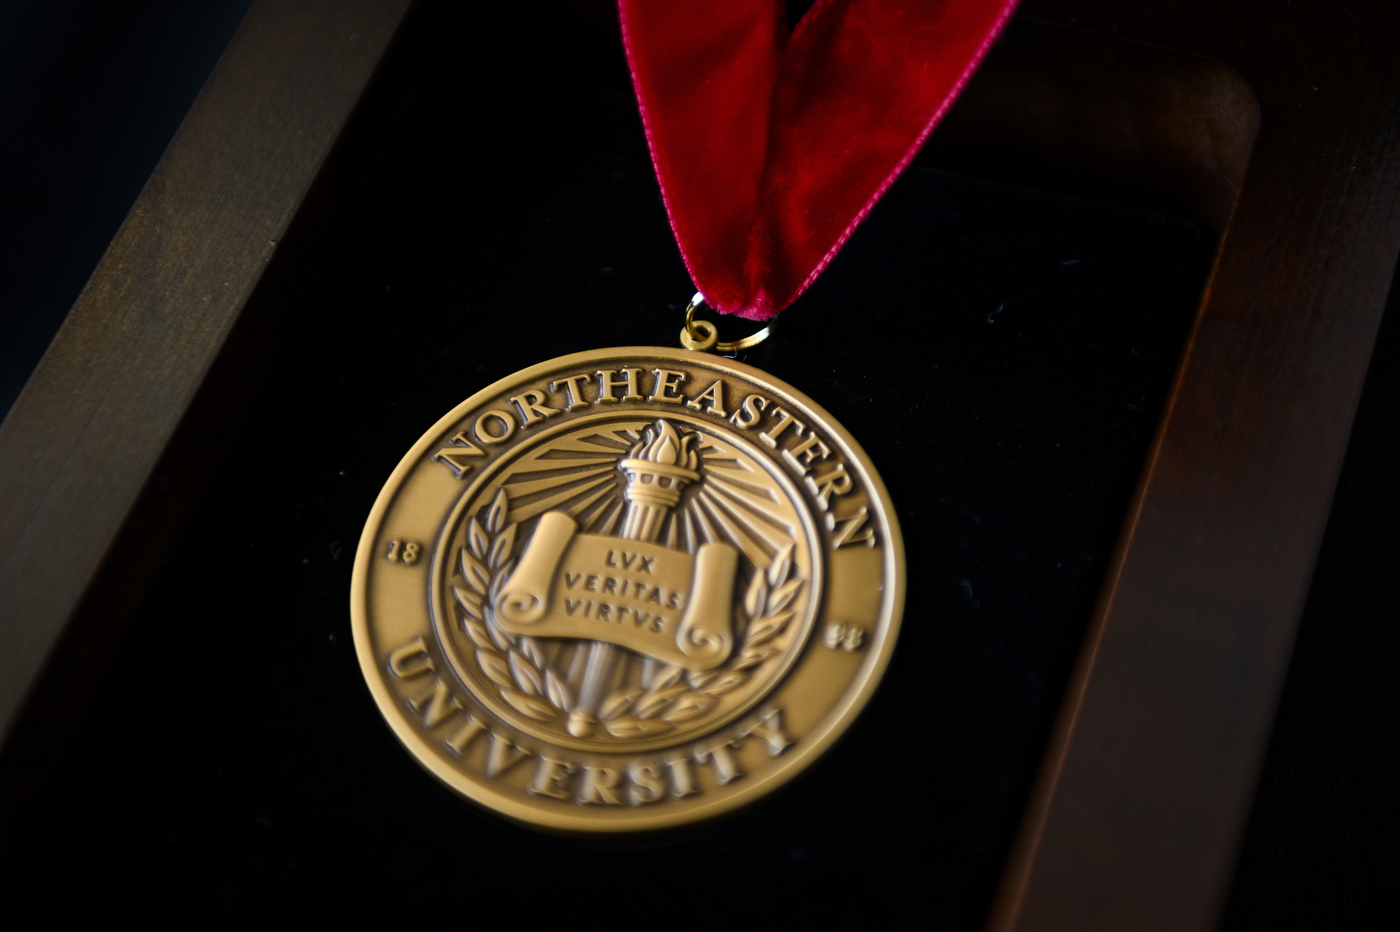 gold northeastern medal